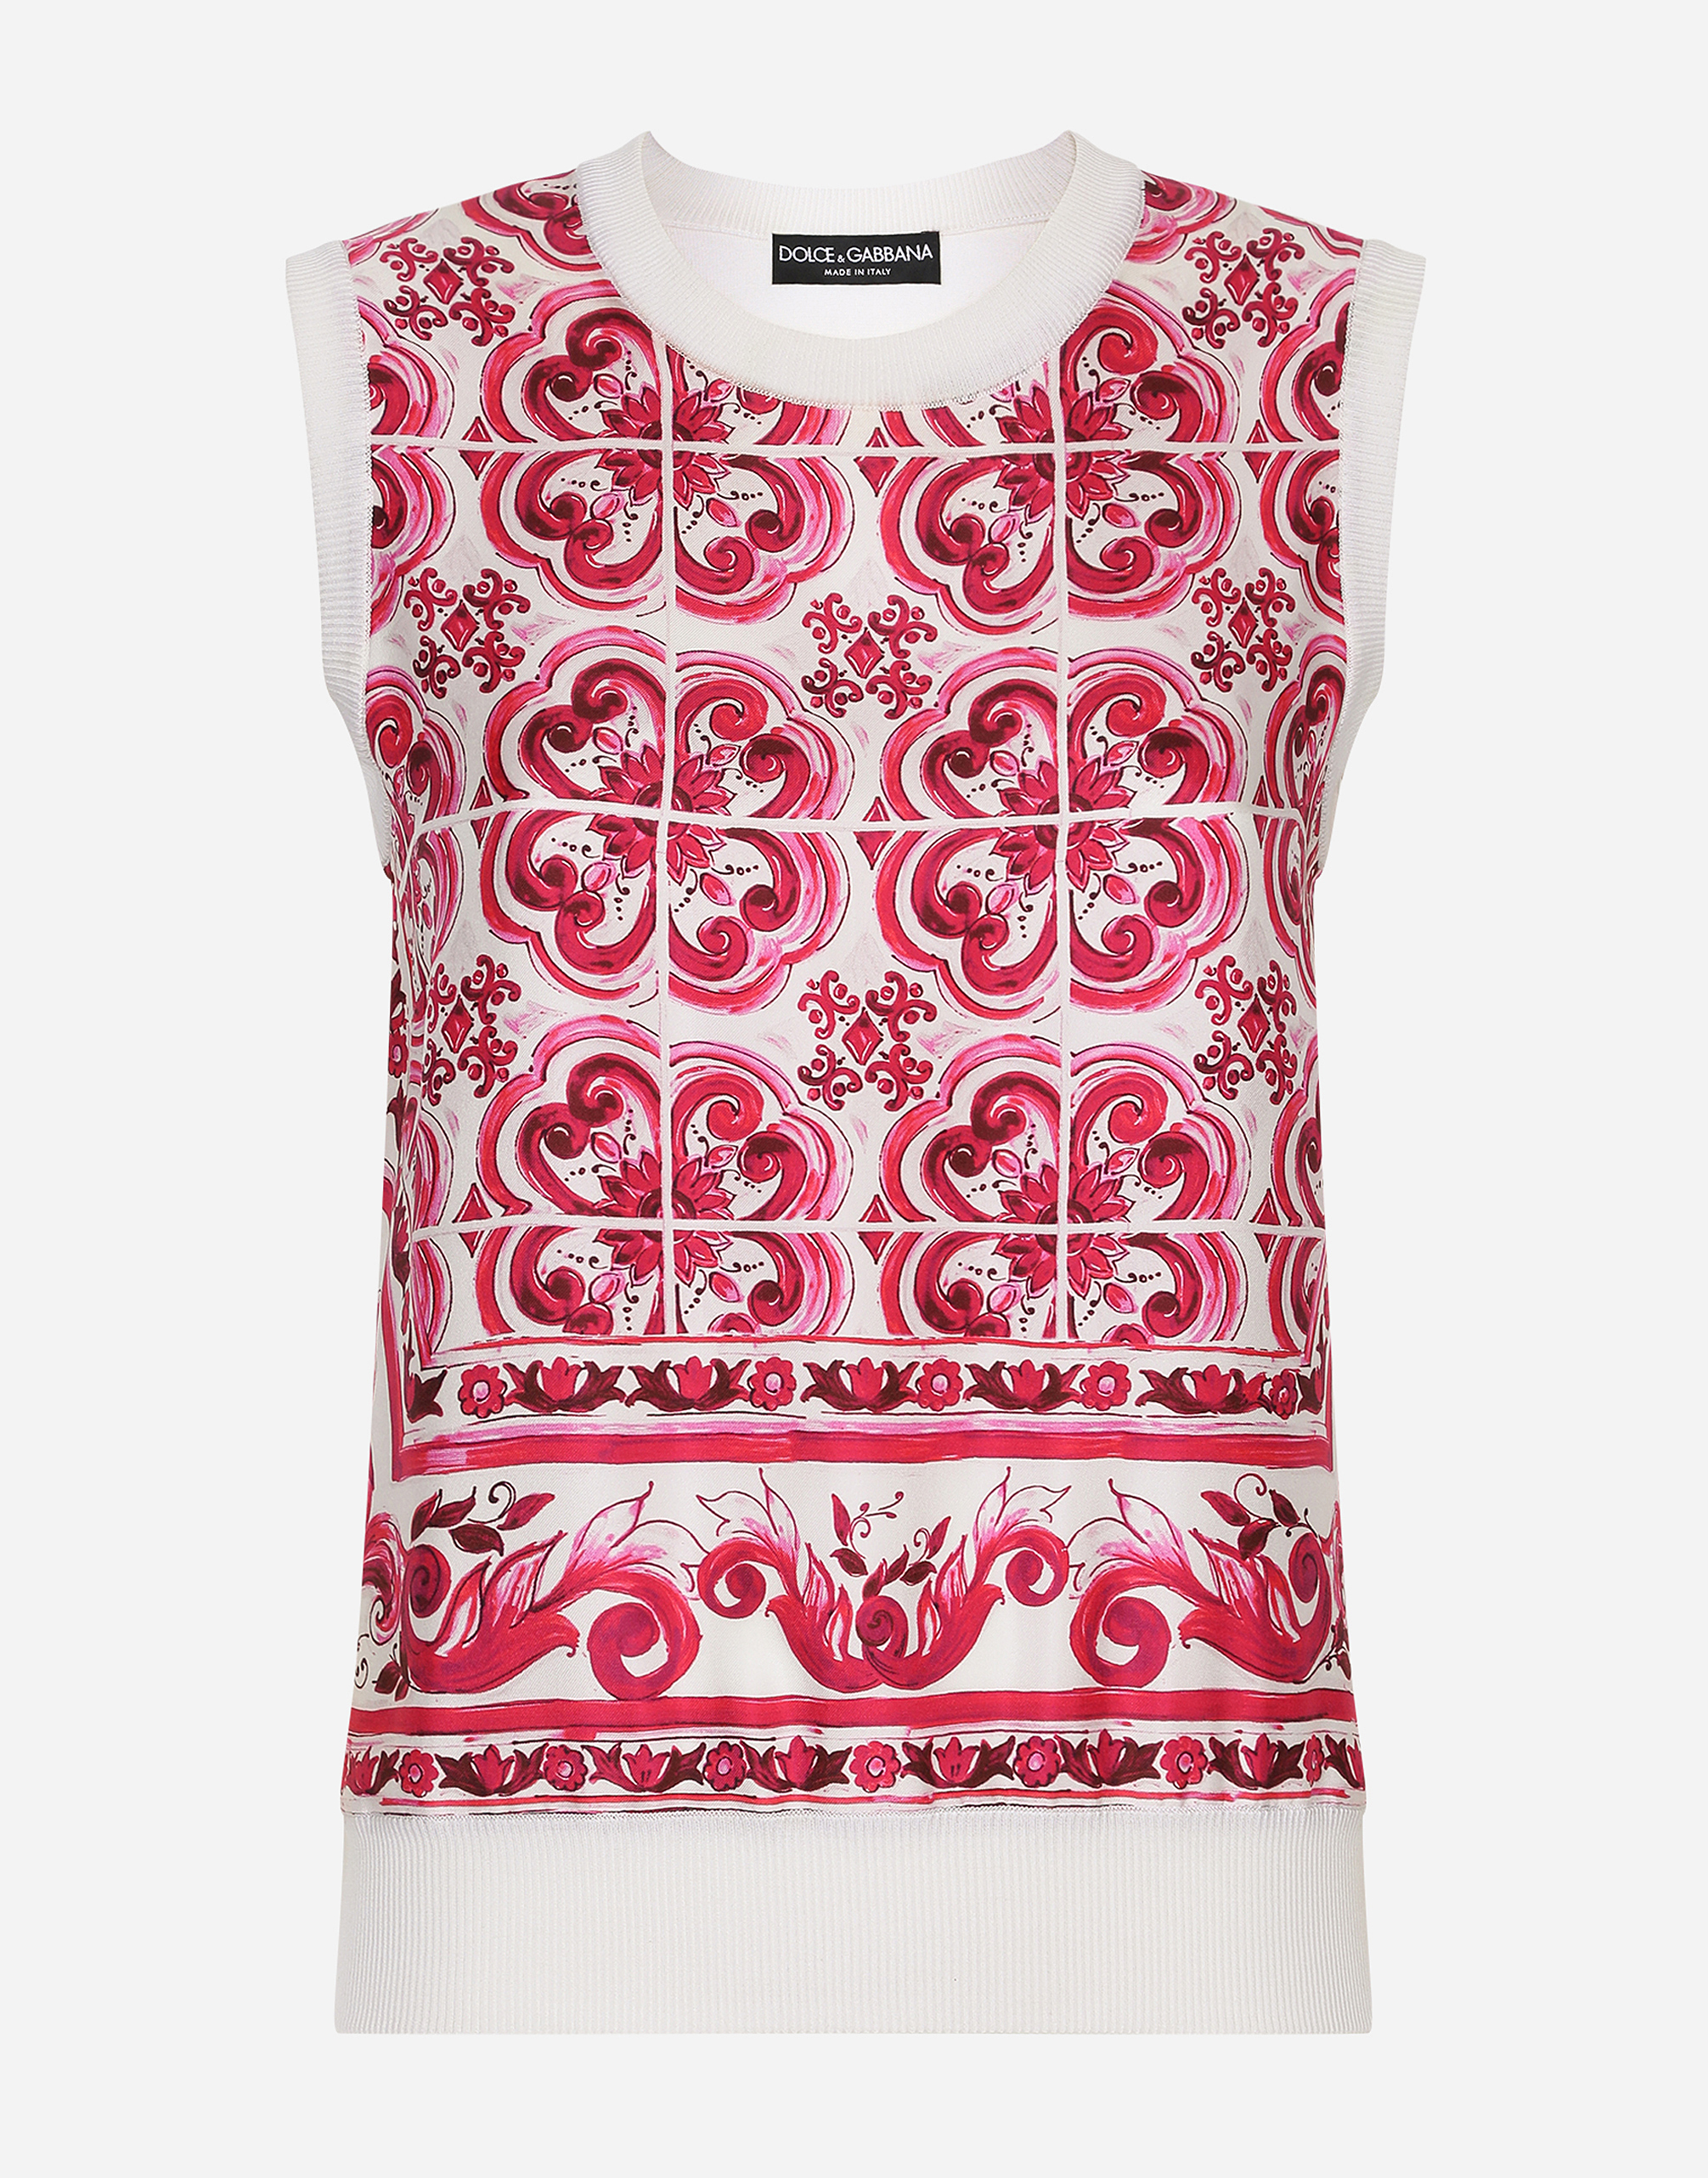 Dolce & Gabbana Silk And Twill Maiolica Print Sweater In Maiolica_3_fuxia